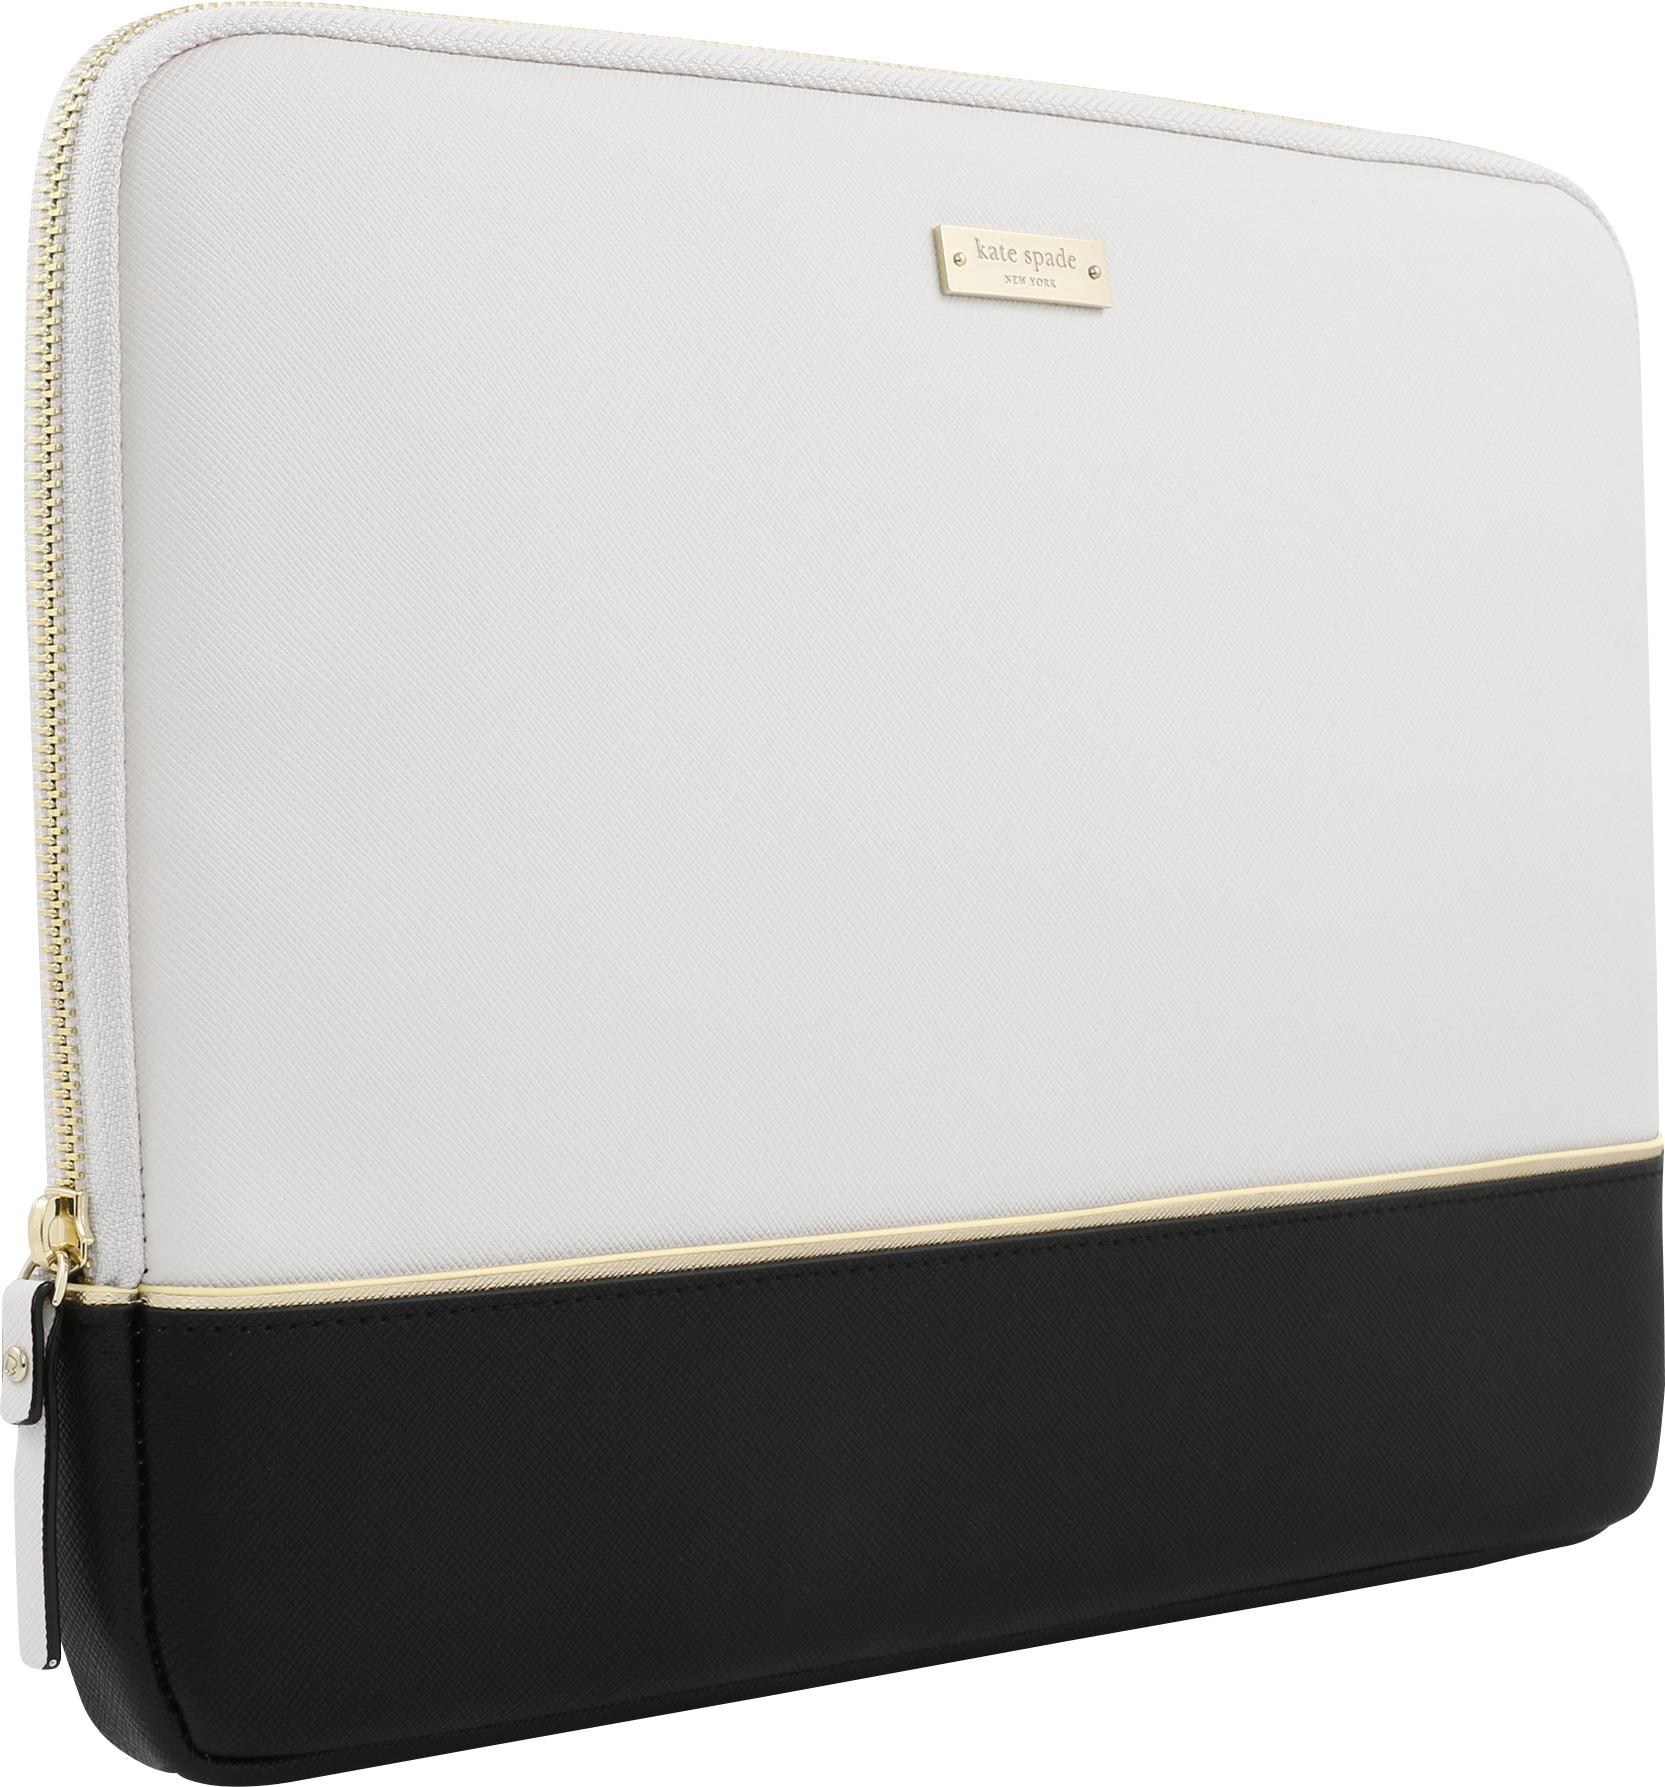 Kate Spade Bags | Kate Spade Brim Laptop Tote Colorblack | Color: Black/Gold | Size: Large | Coachkors5's Closet